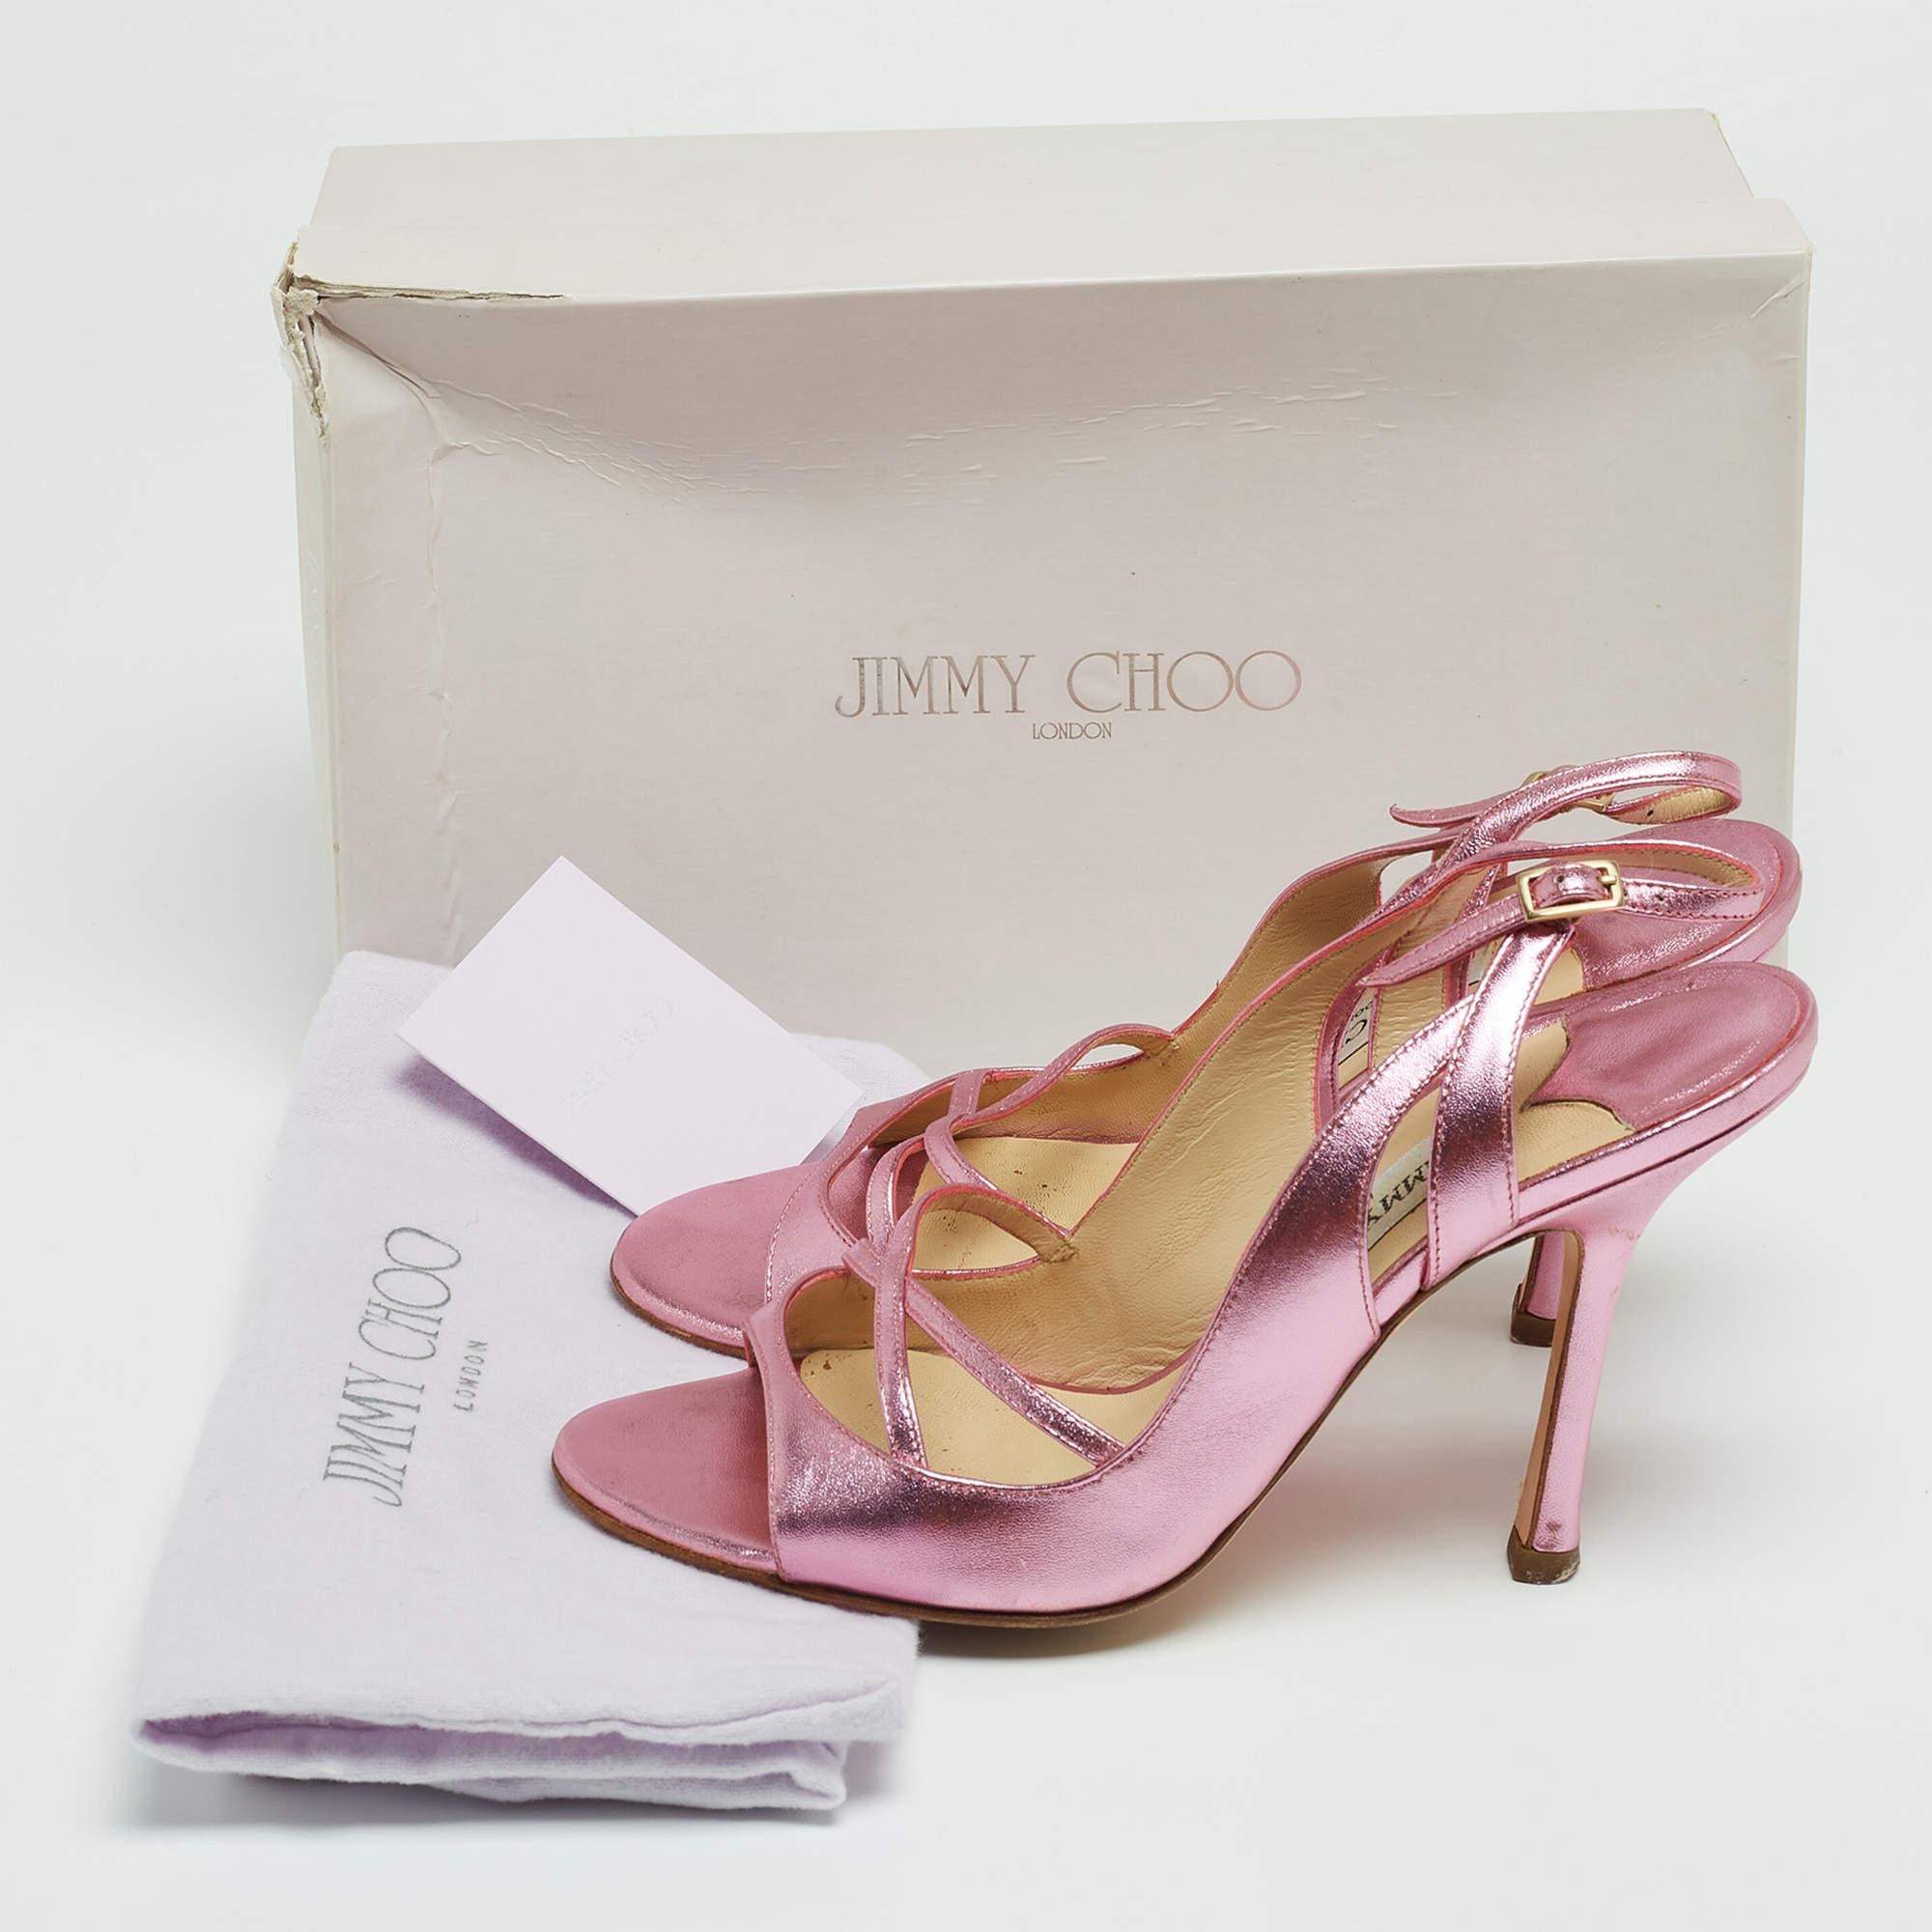 Jimmy Choo Metallic Pink Leather Slingback Sandals Size 37.5 5